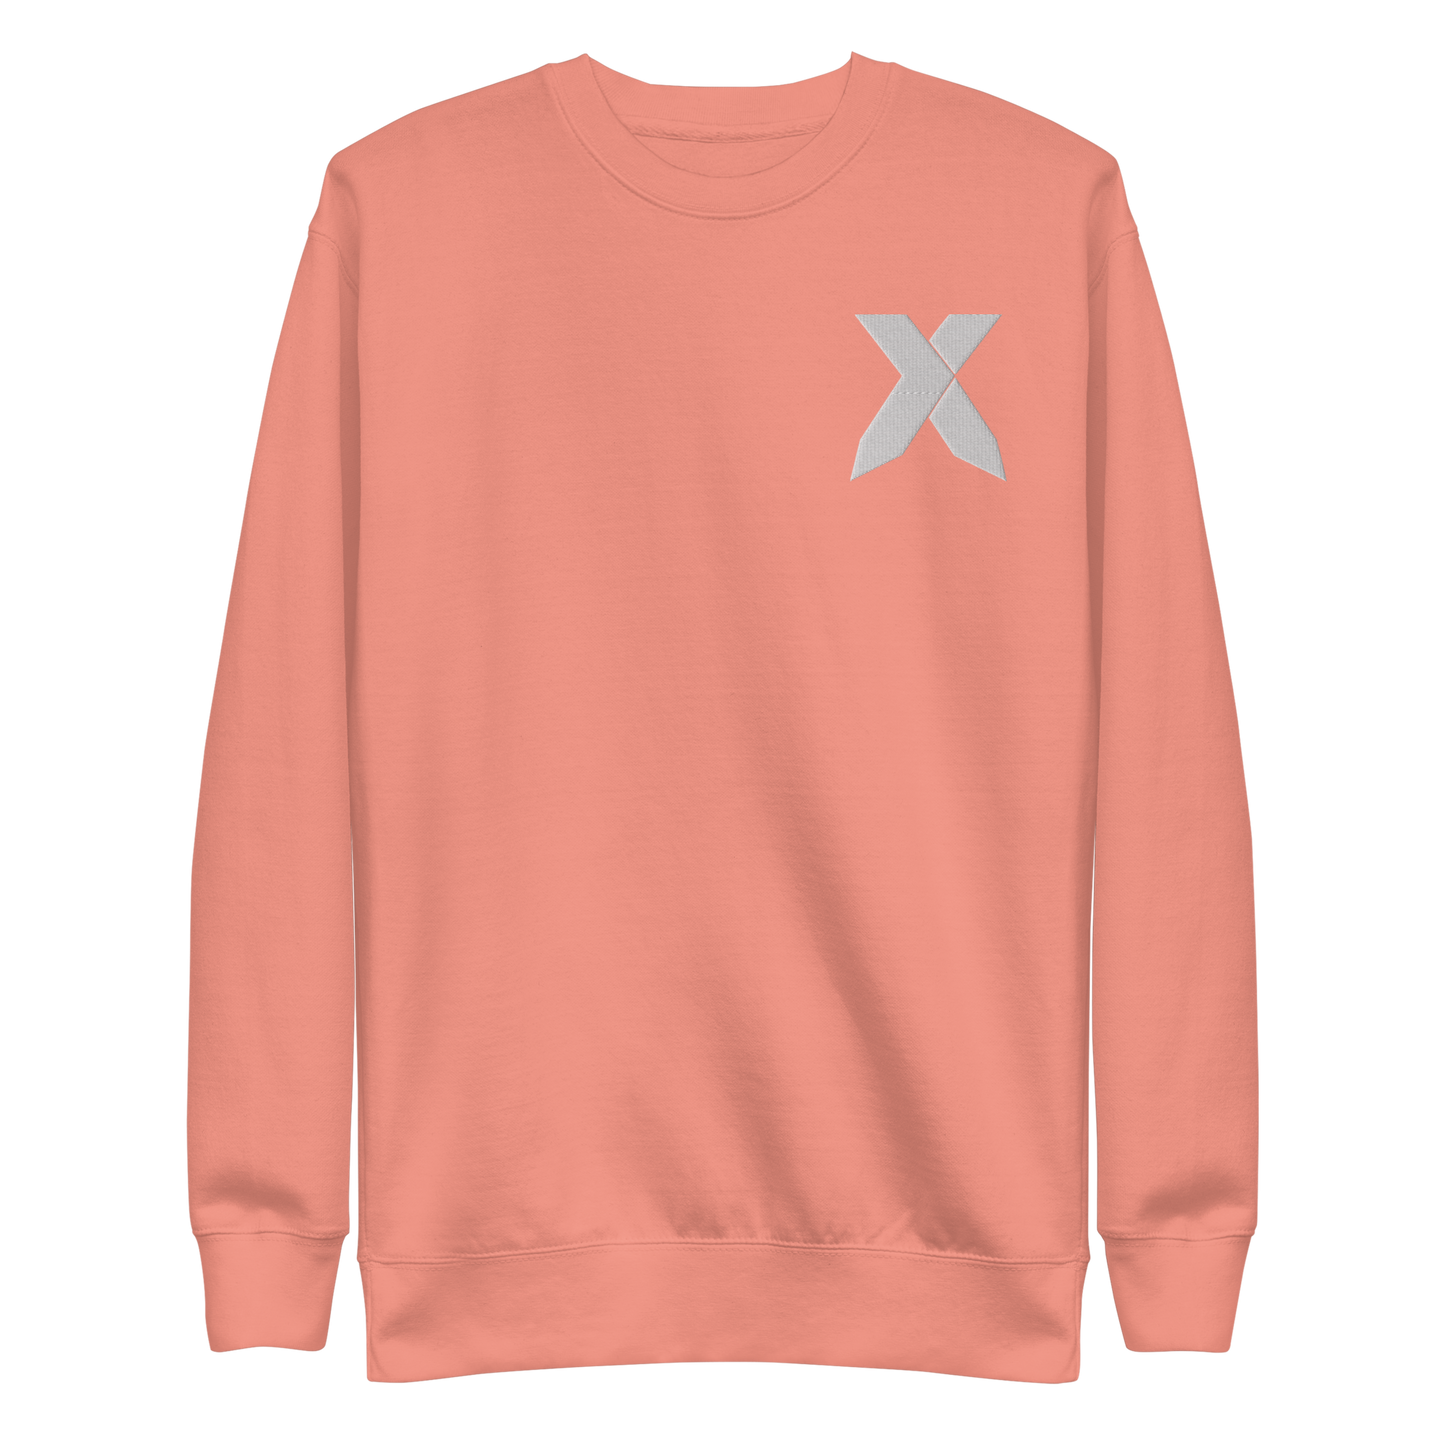 NXS Logo Unisex Premium Sweatshirt (Embroidered)